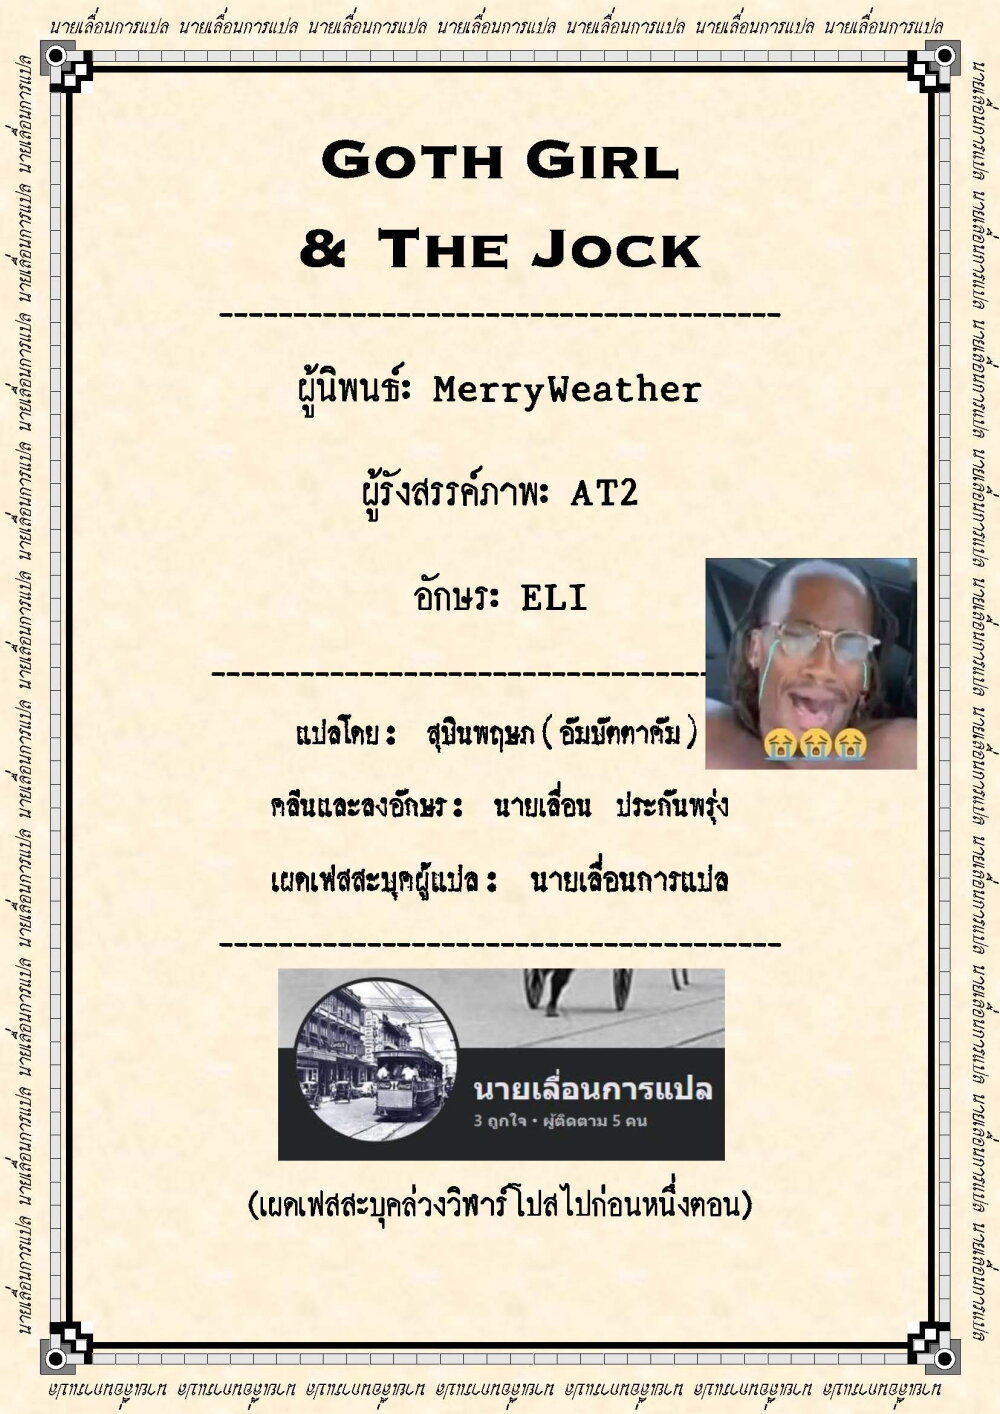 Goth Girl & The Jock 21 12